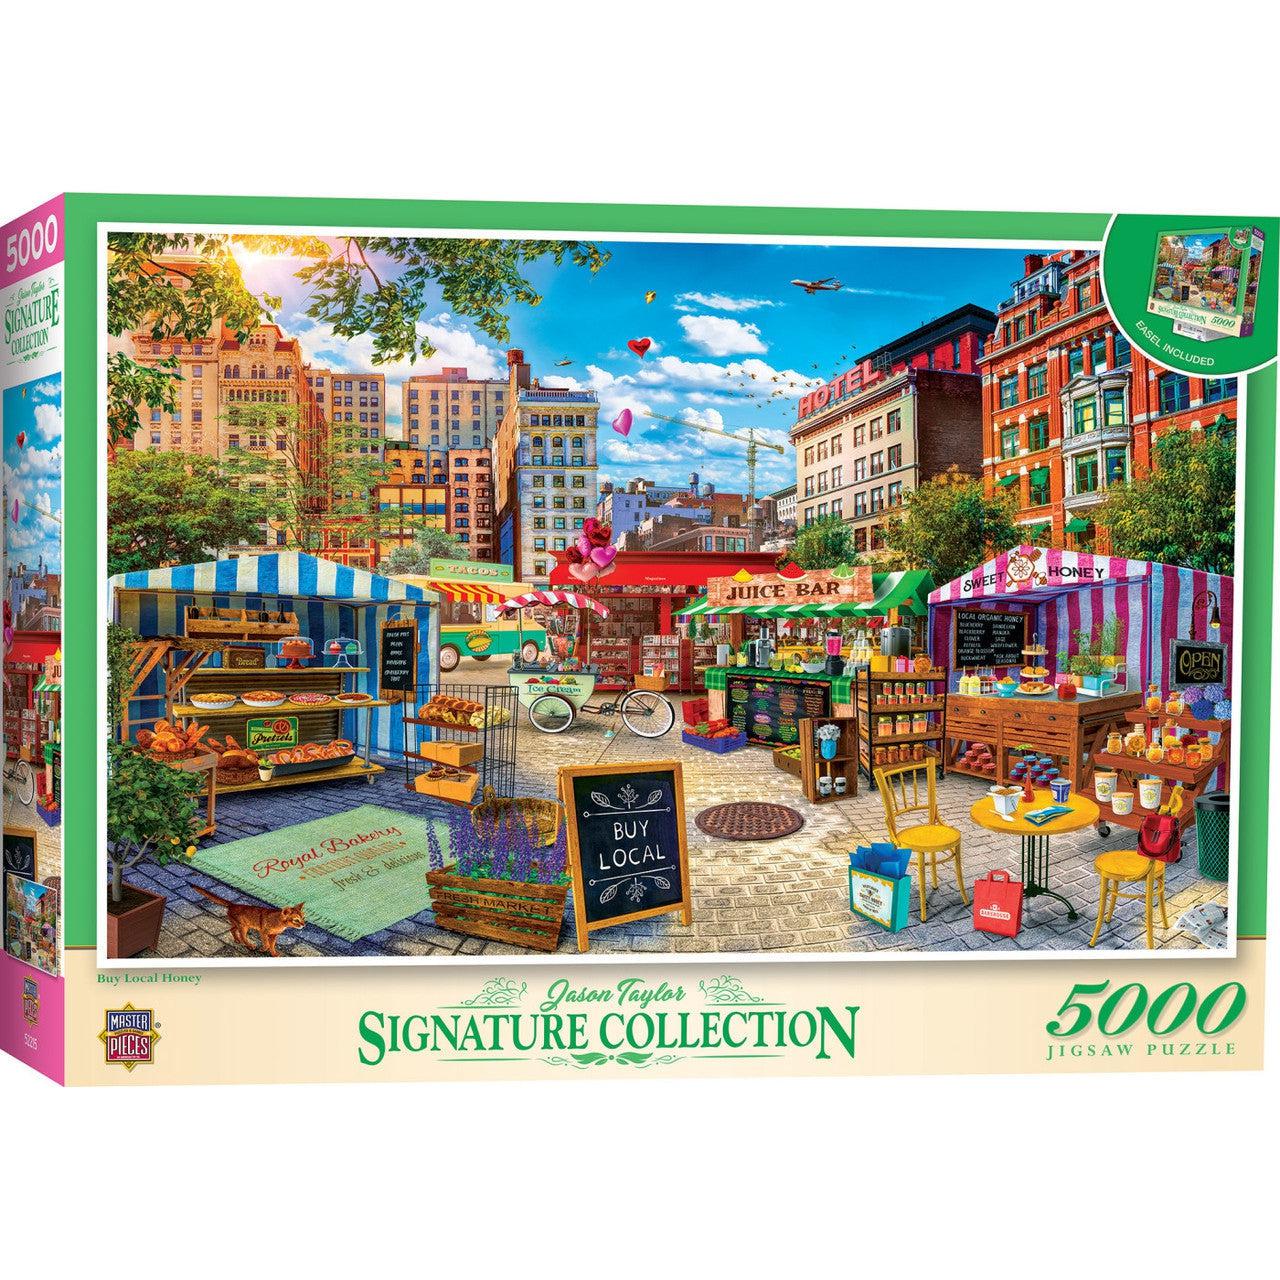 MasterPieces-Signature - Buy Local Honey - 5000 Piece Puzzle-72296-Legacy Toys